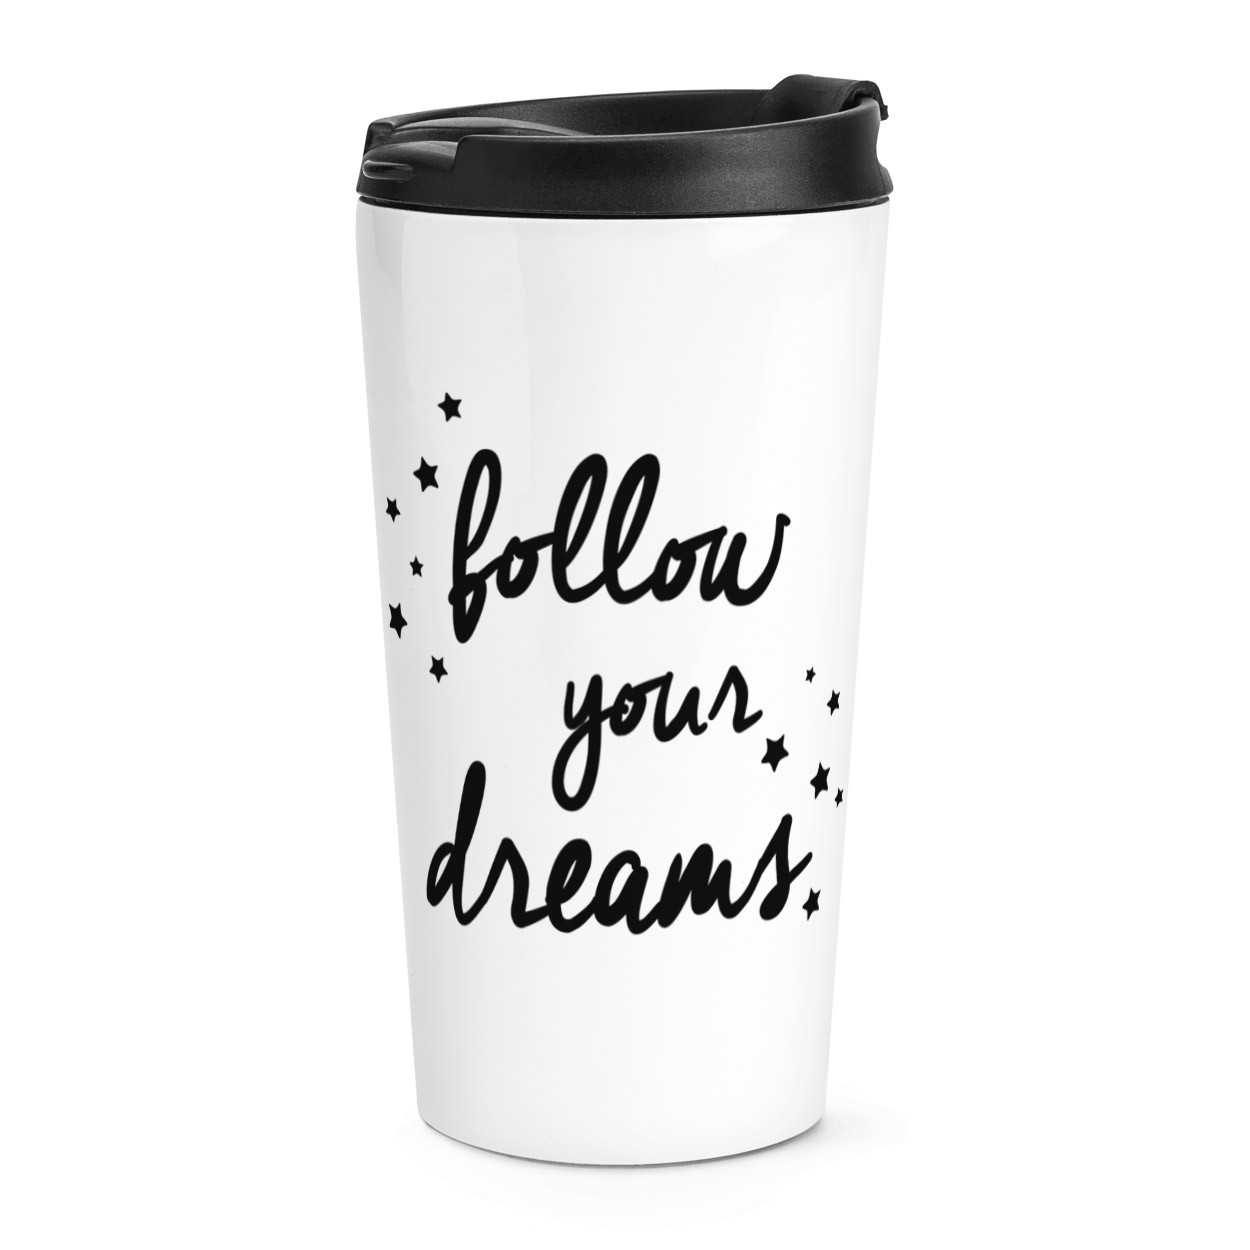 Follow Your Dreams Travel Mug Cup